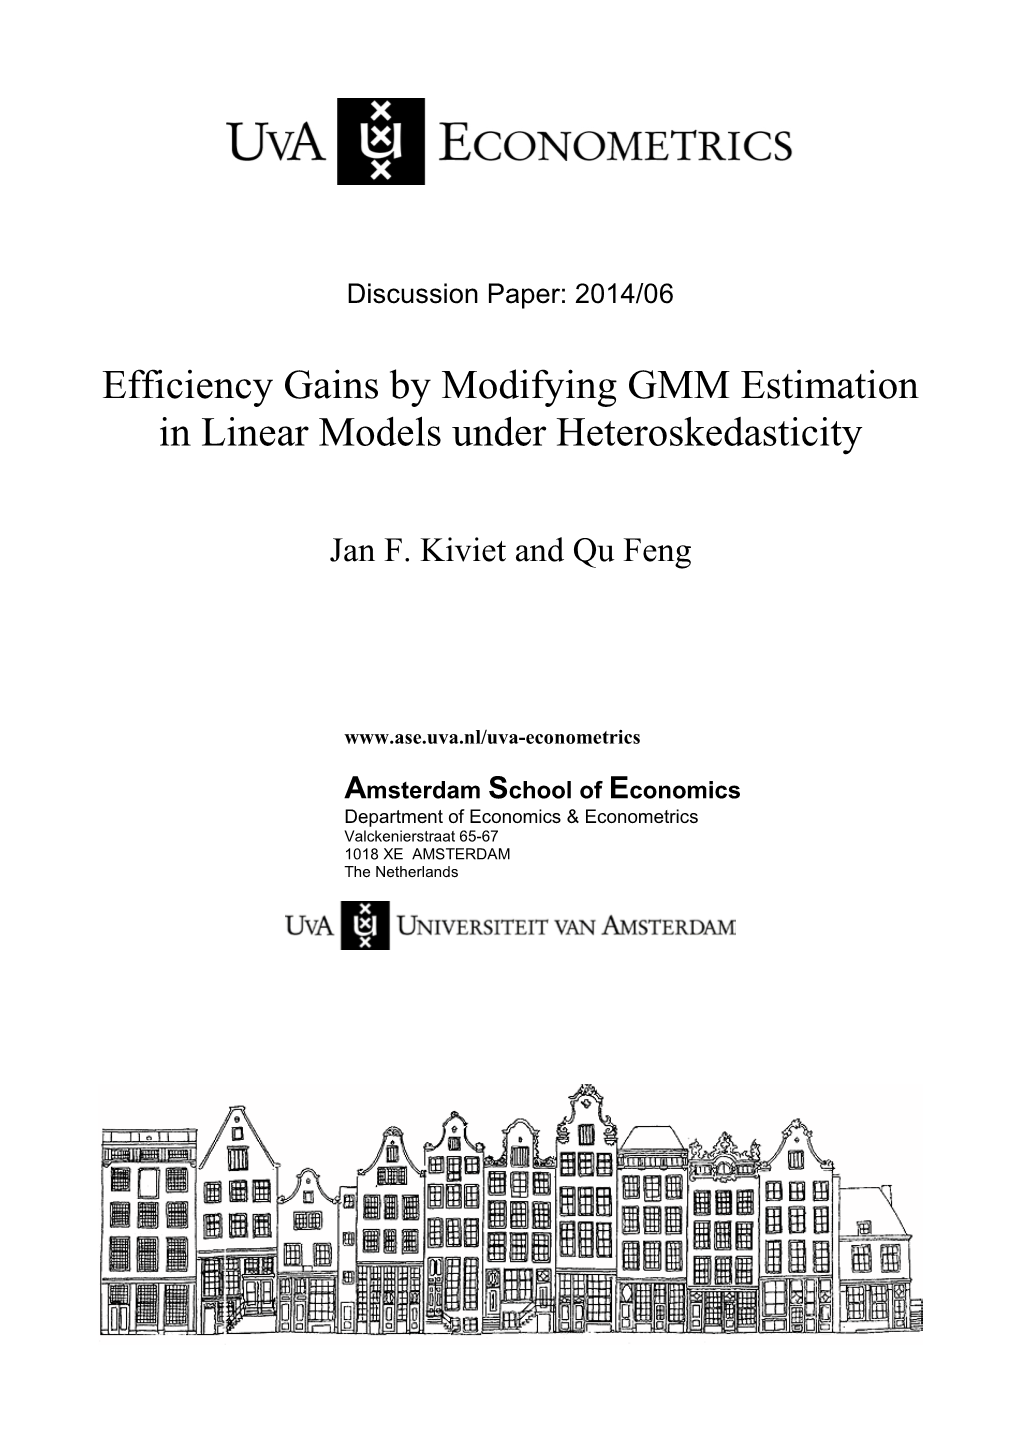 Efficiency Gains by Modifying GMM Estimation in Linear Models Under Heteroskedasticity